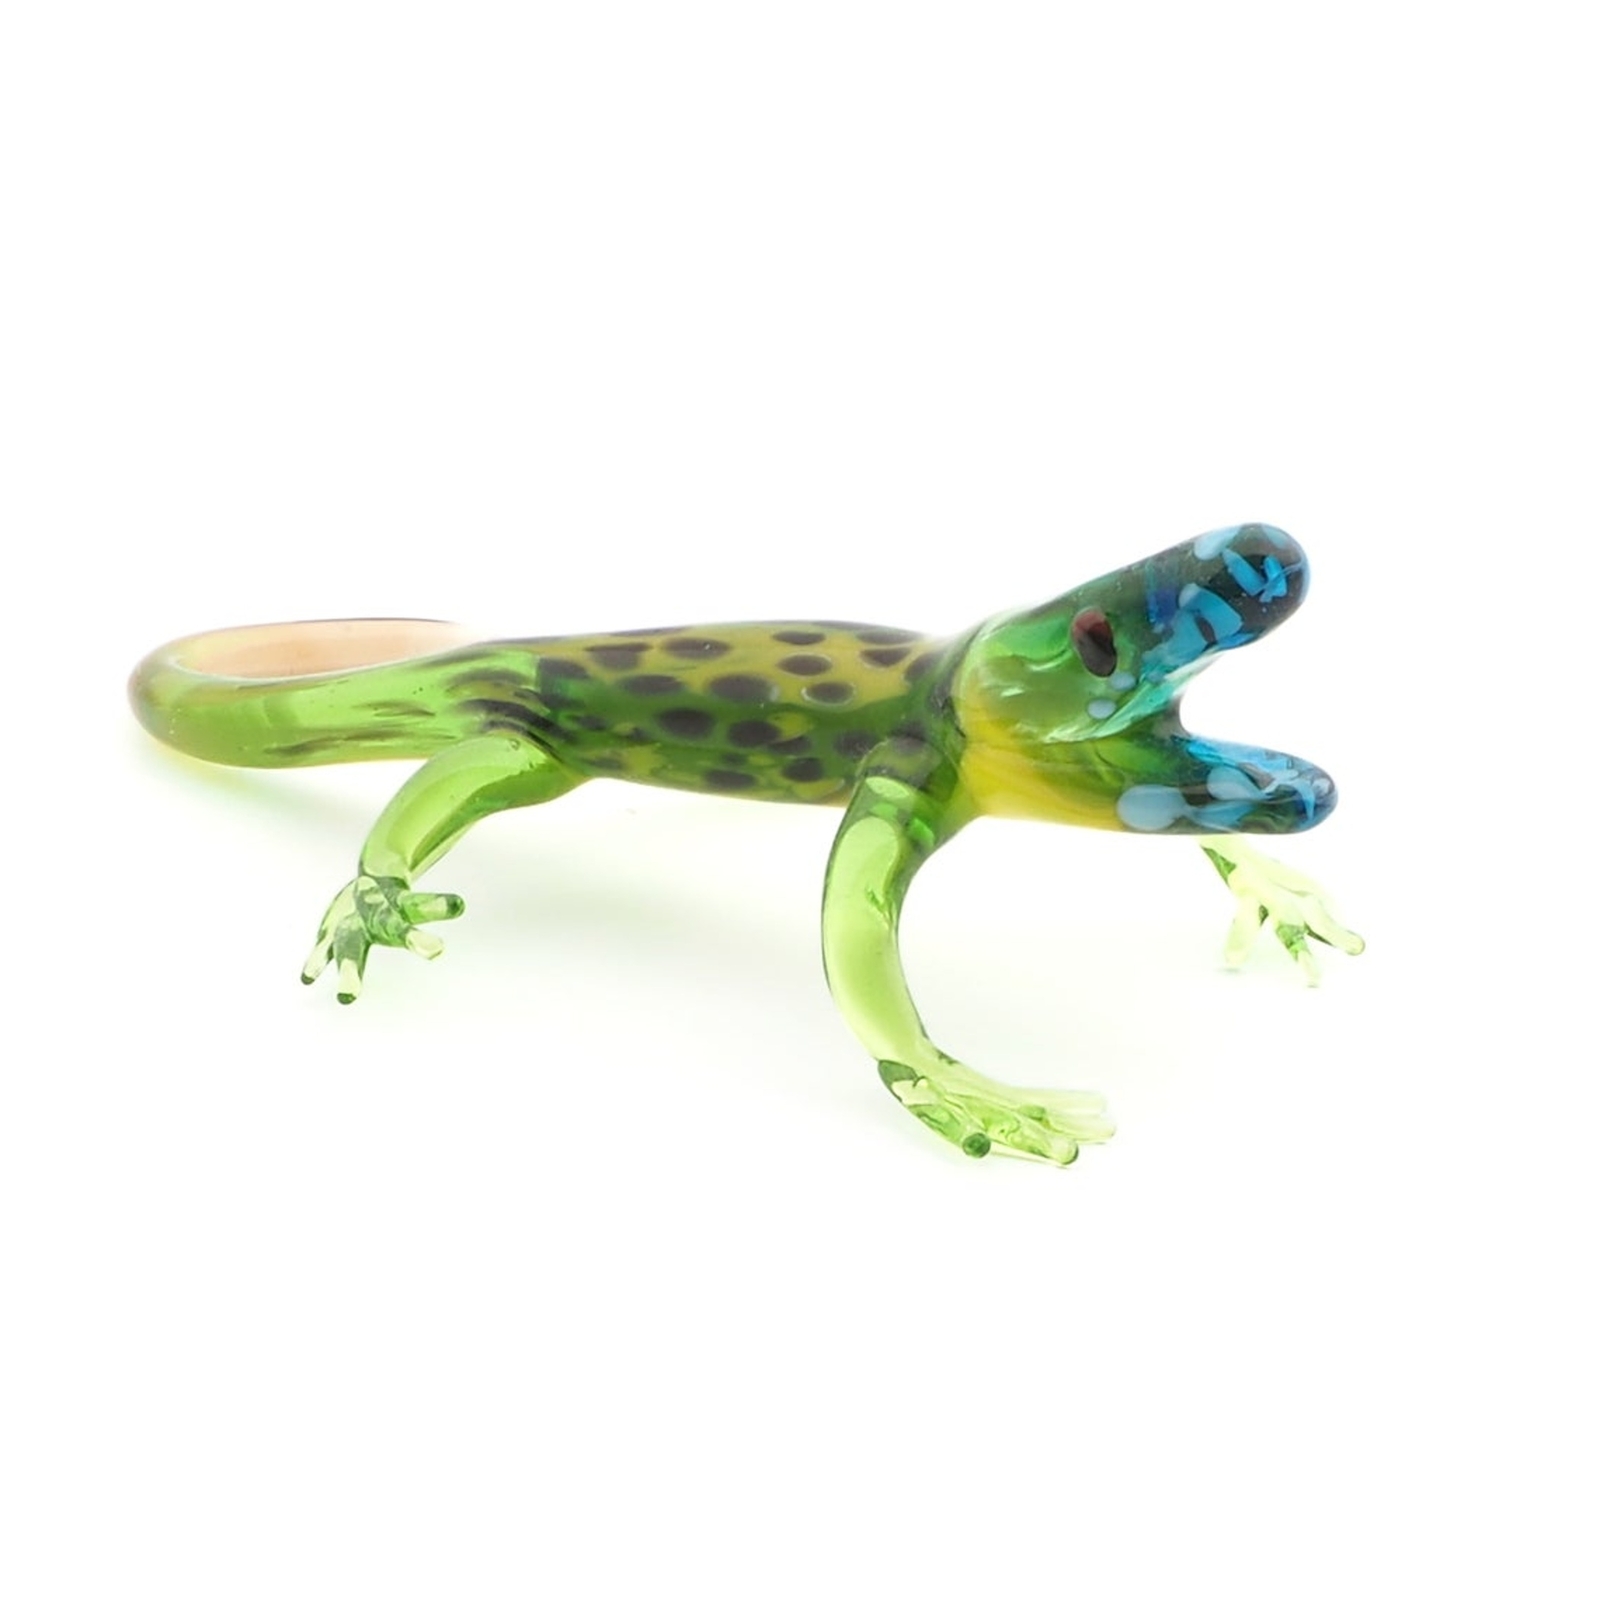 Czech handmade lampwork glass miniature lizard Iguana figurine ornament